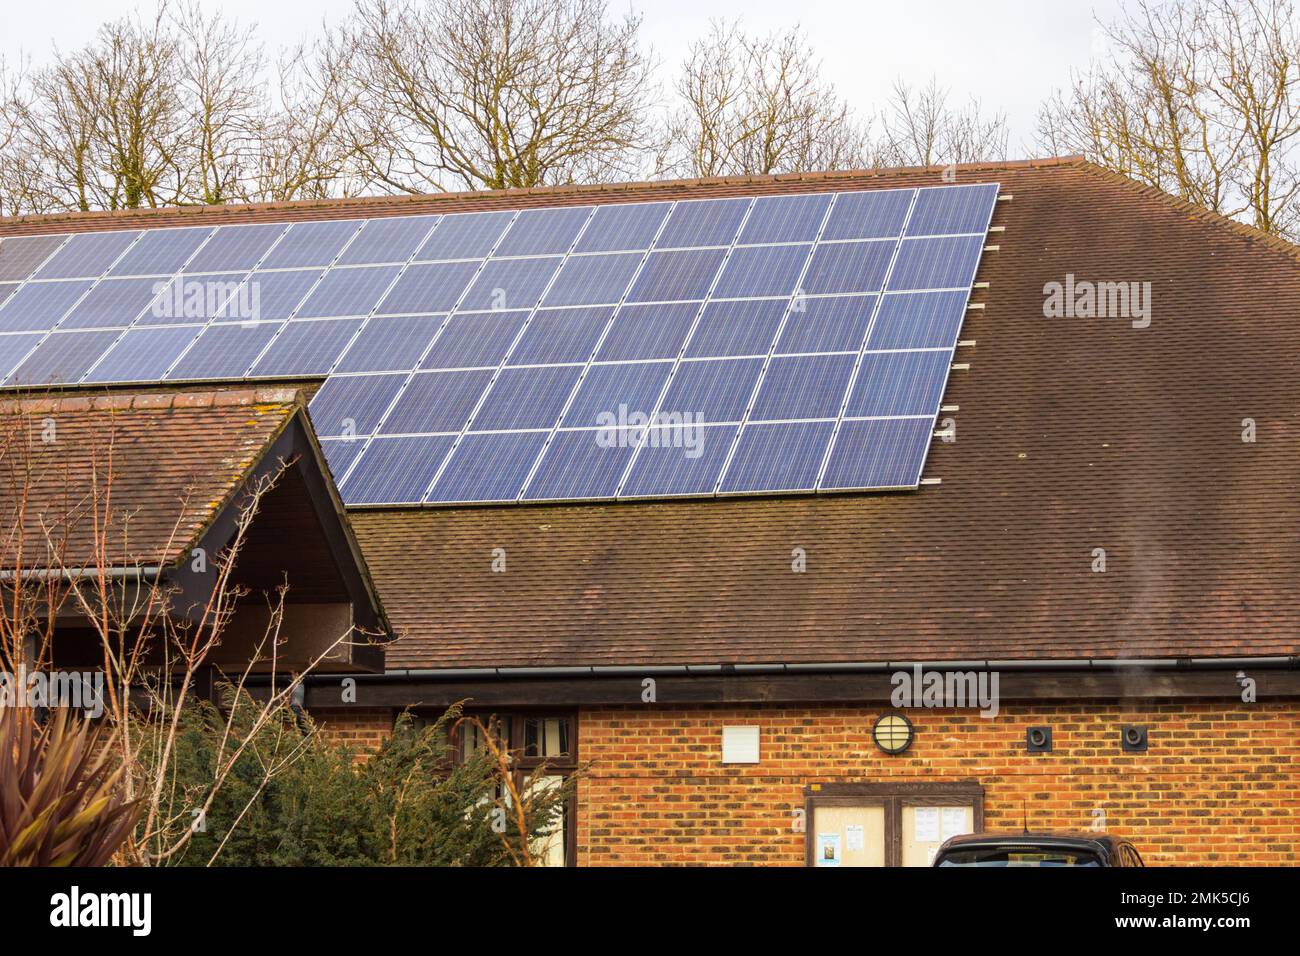 Solar panels on the roof of Lenham community centre, kent, uk Stock Photo